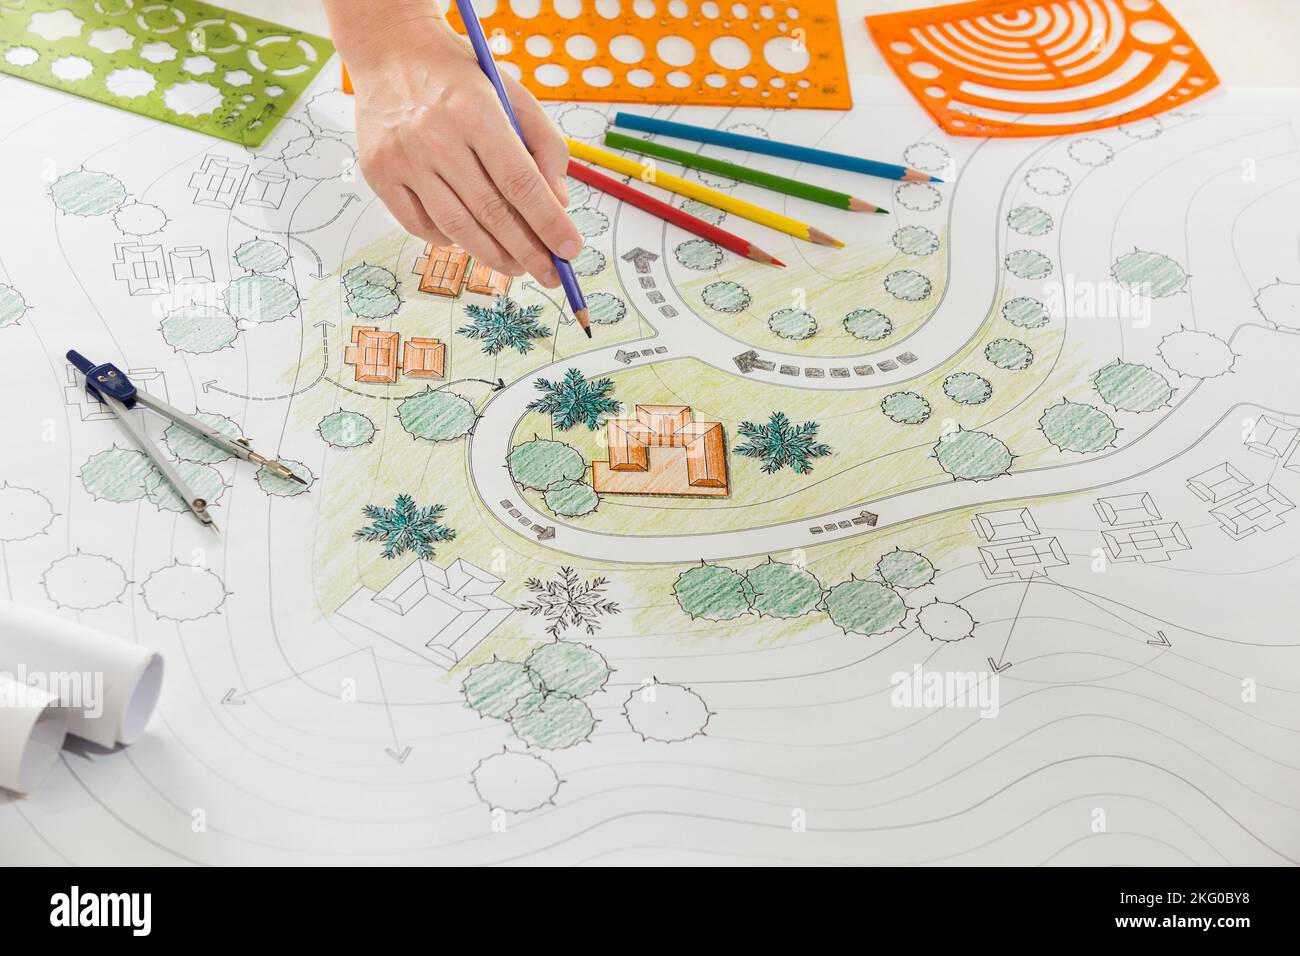 Landscape Designs Blueprints For Resort. Stock Photo